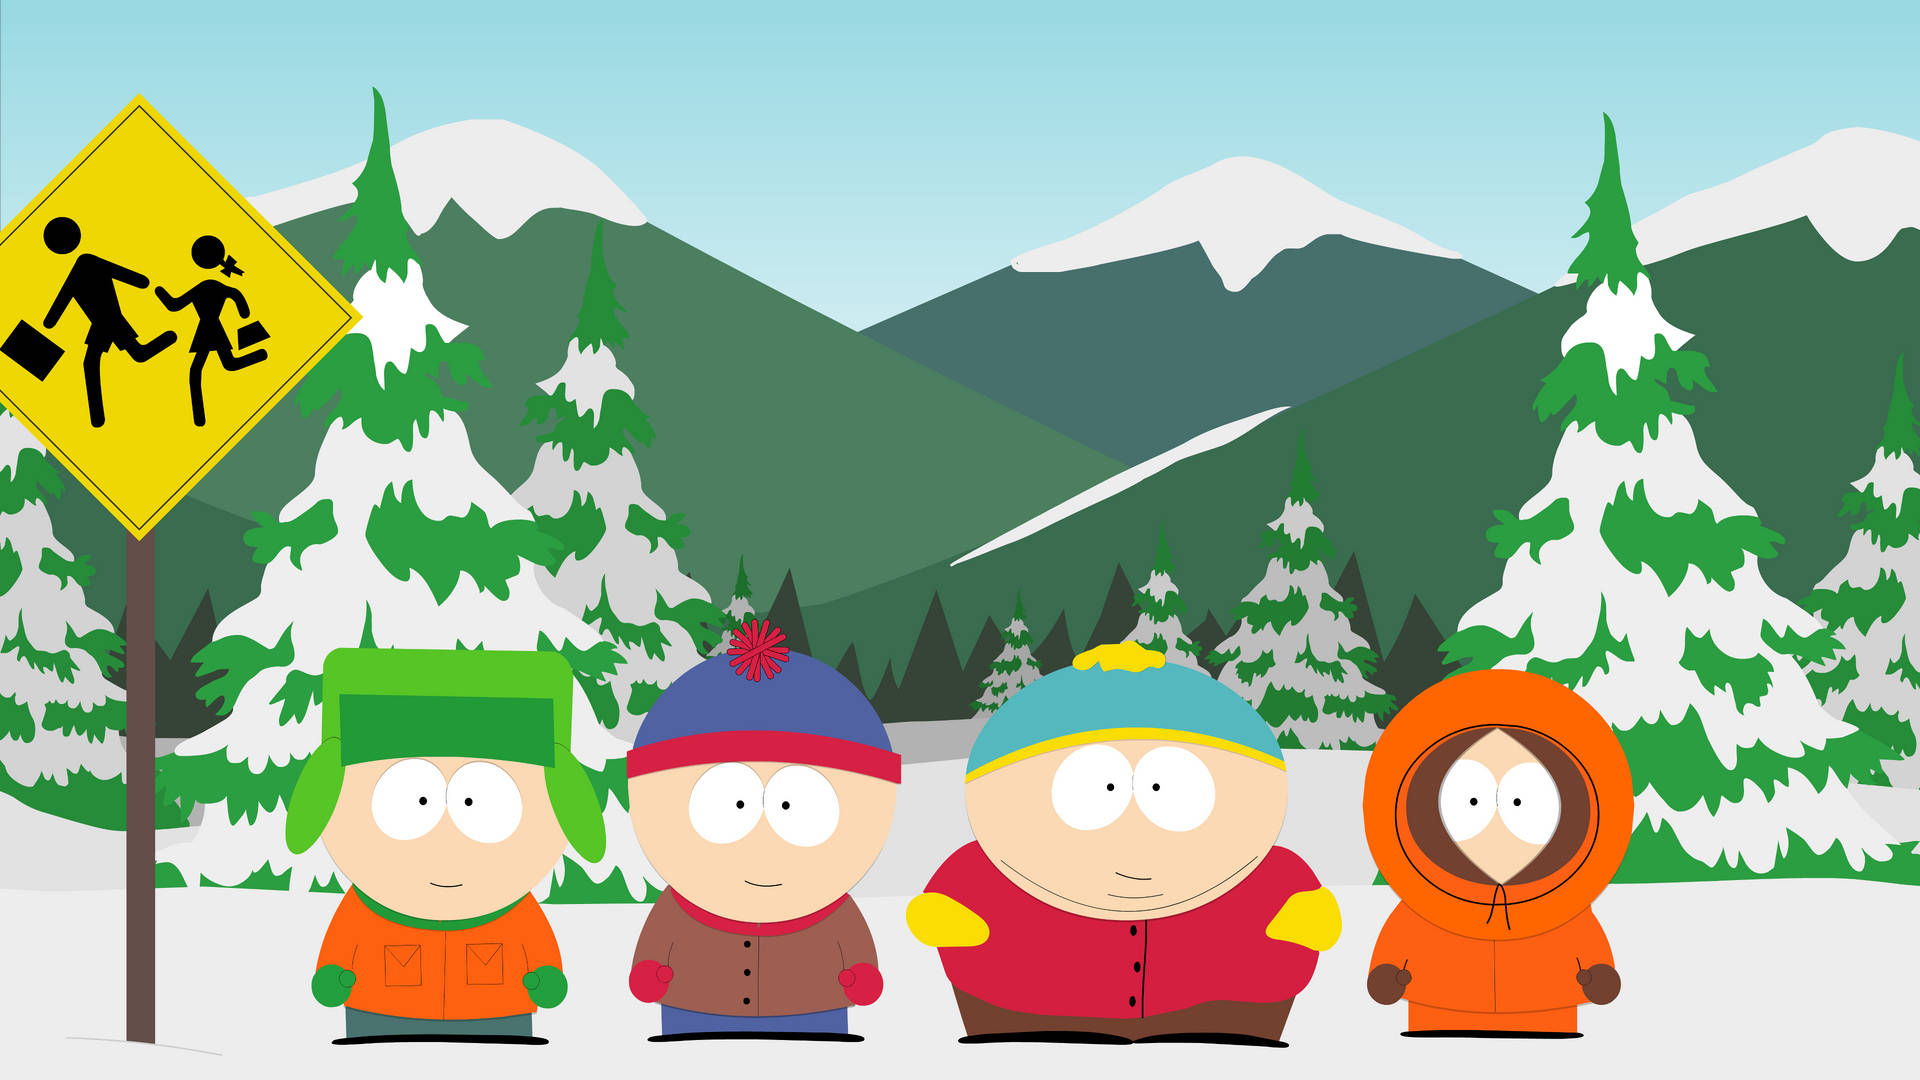 South Park Winter Season Background